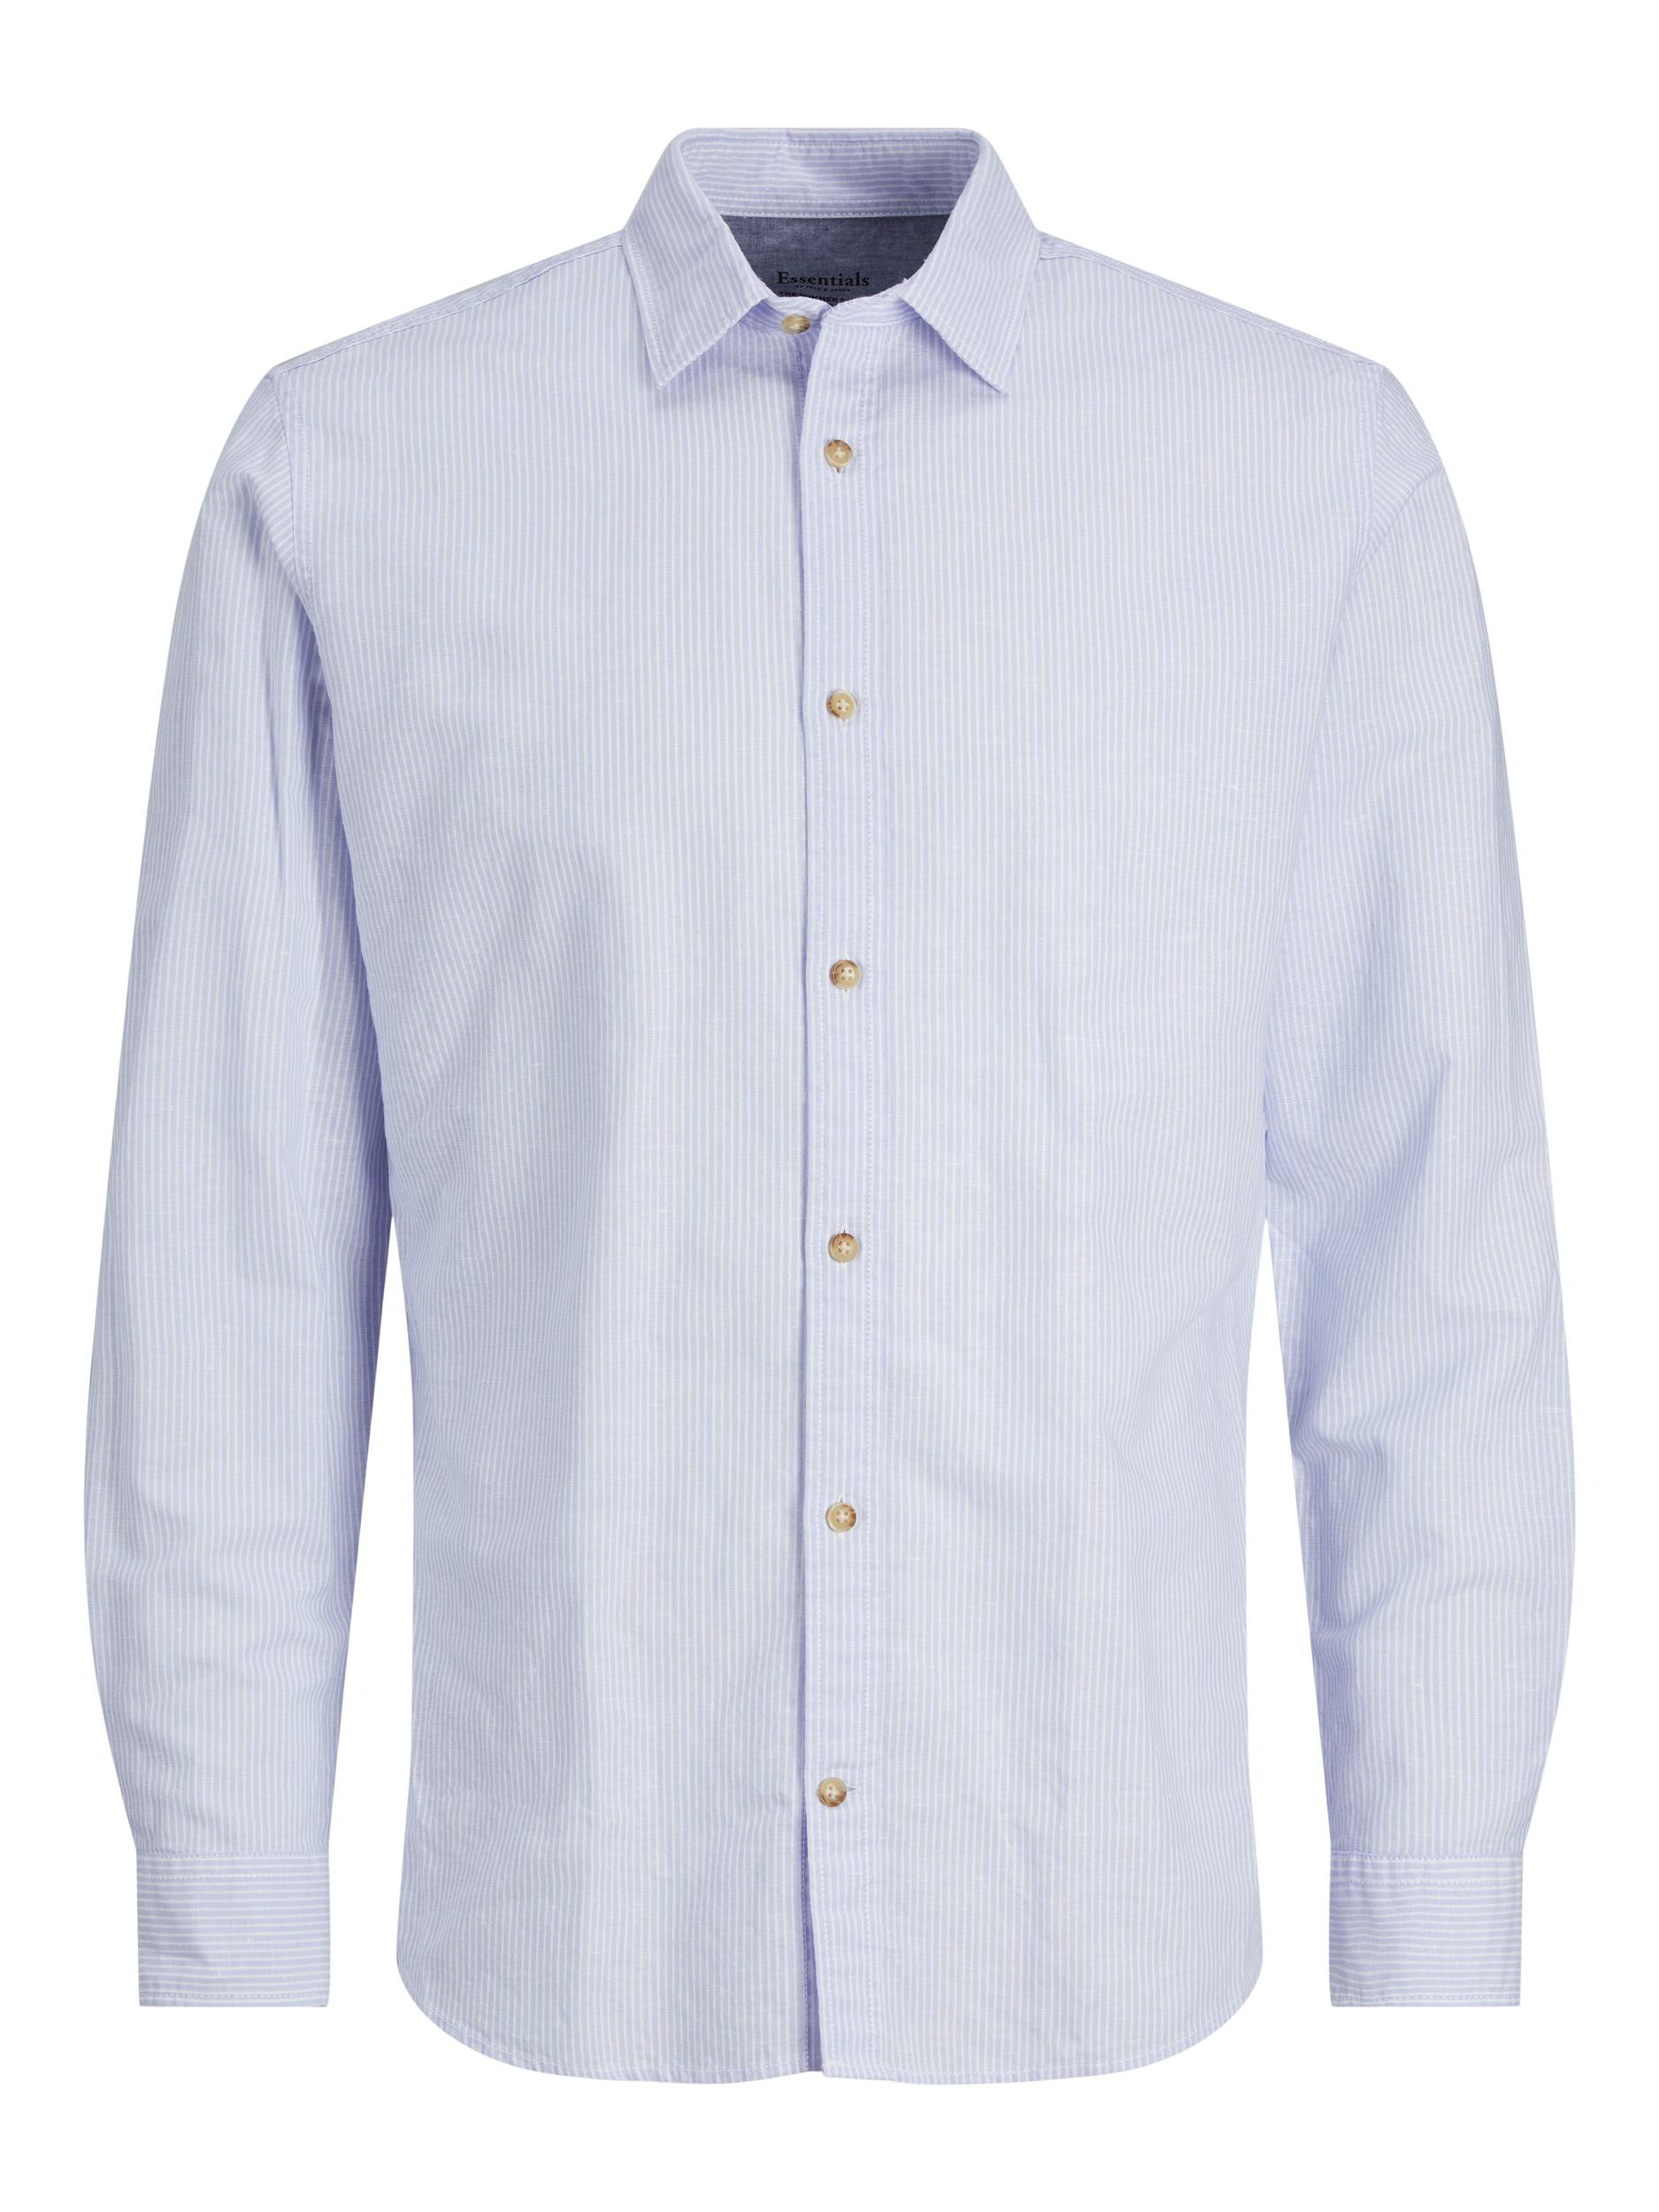 Jack & Jones - Camicia a righe slim fit, Azzurro chiaro, large image number 0